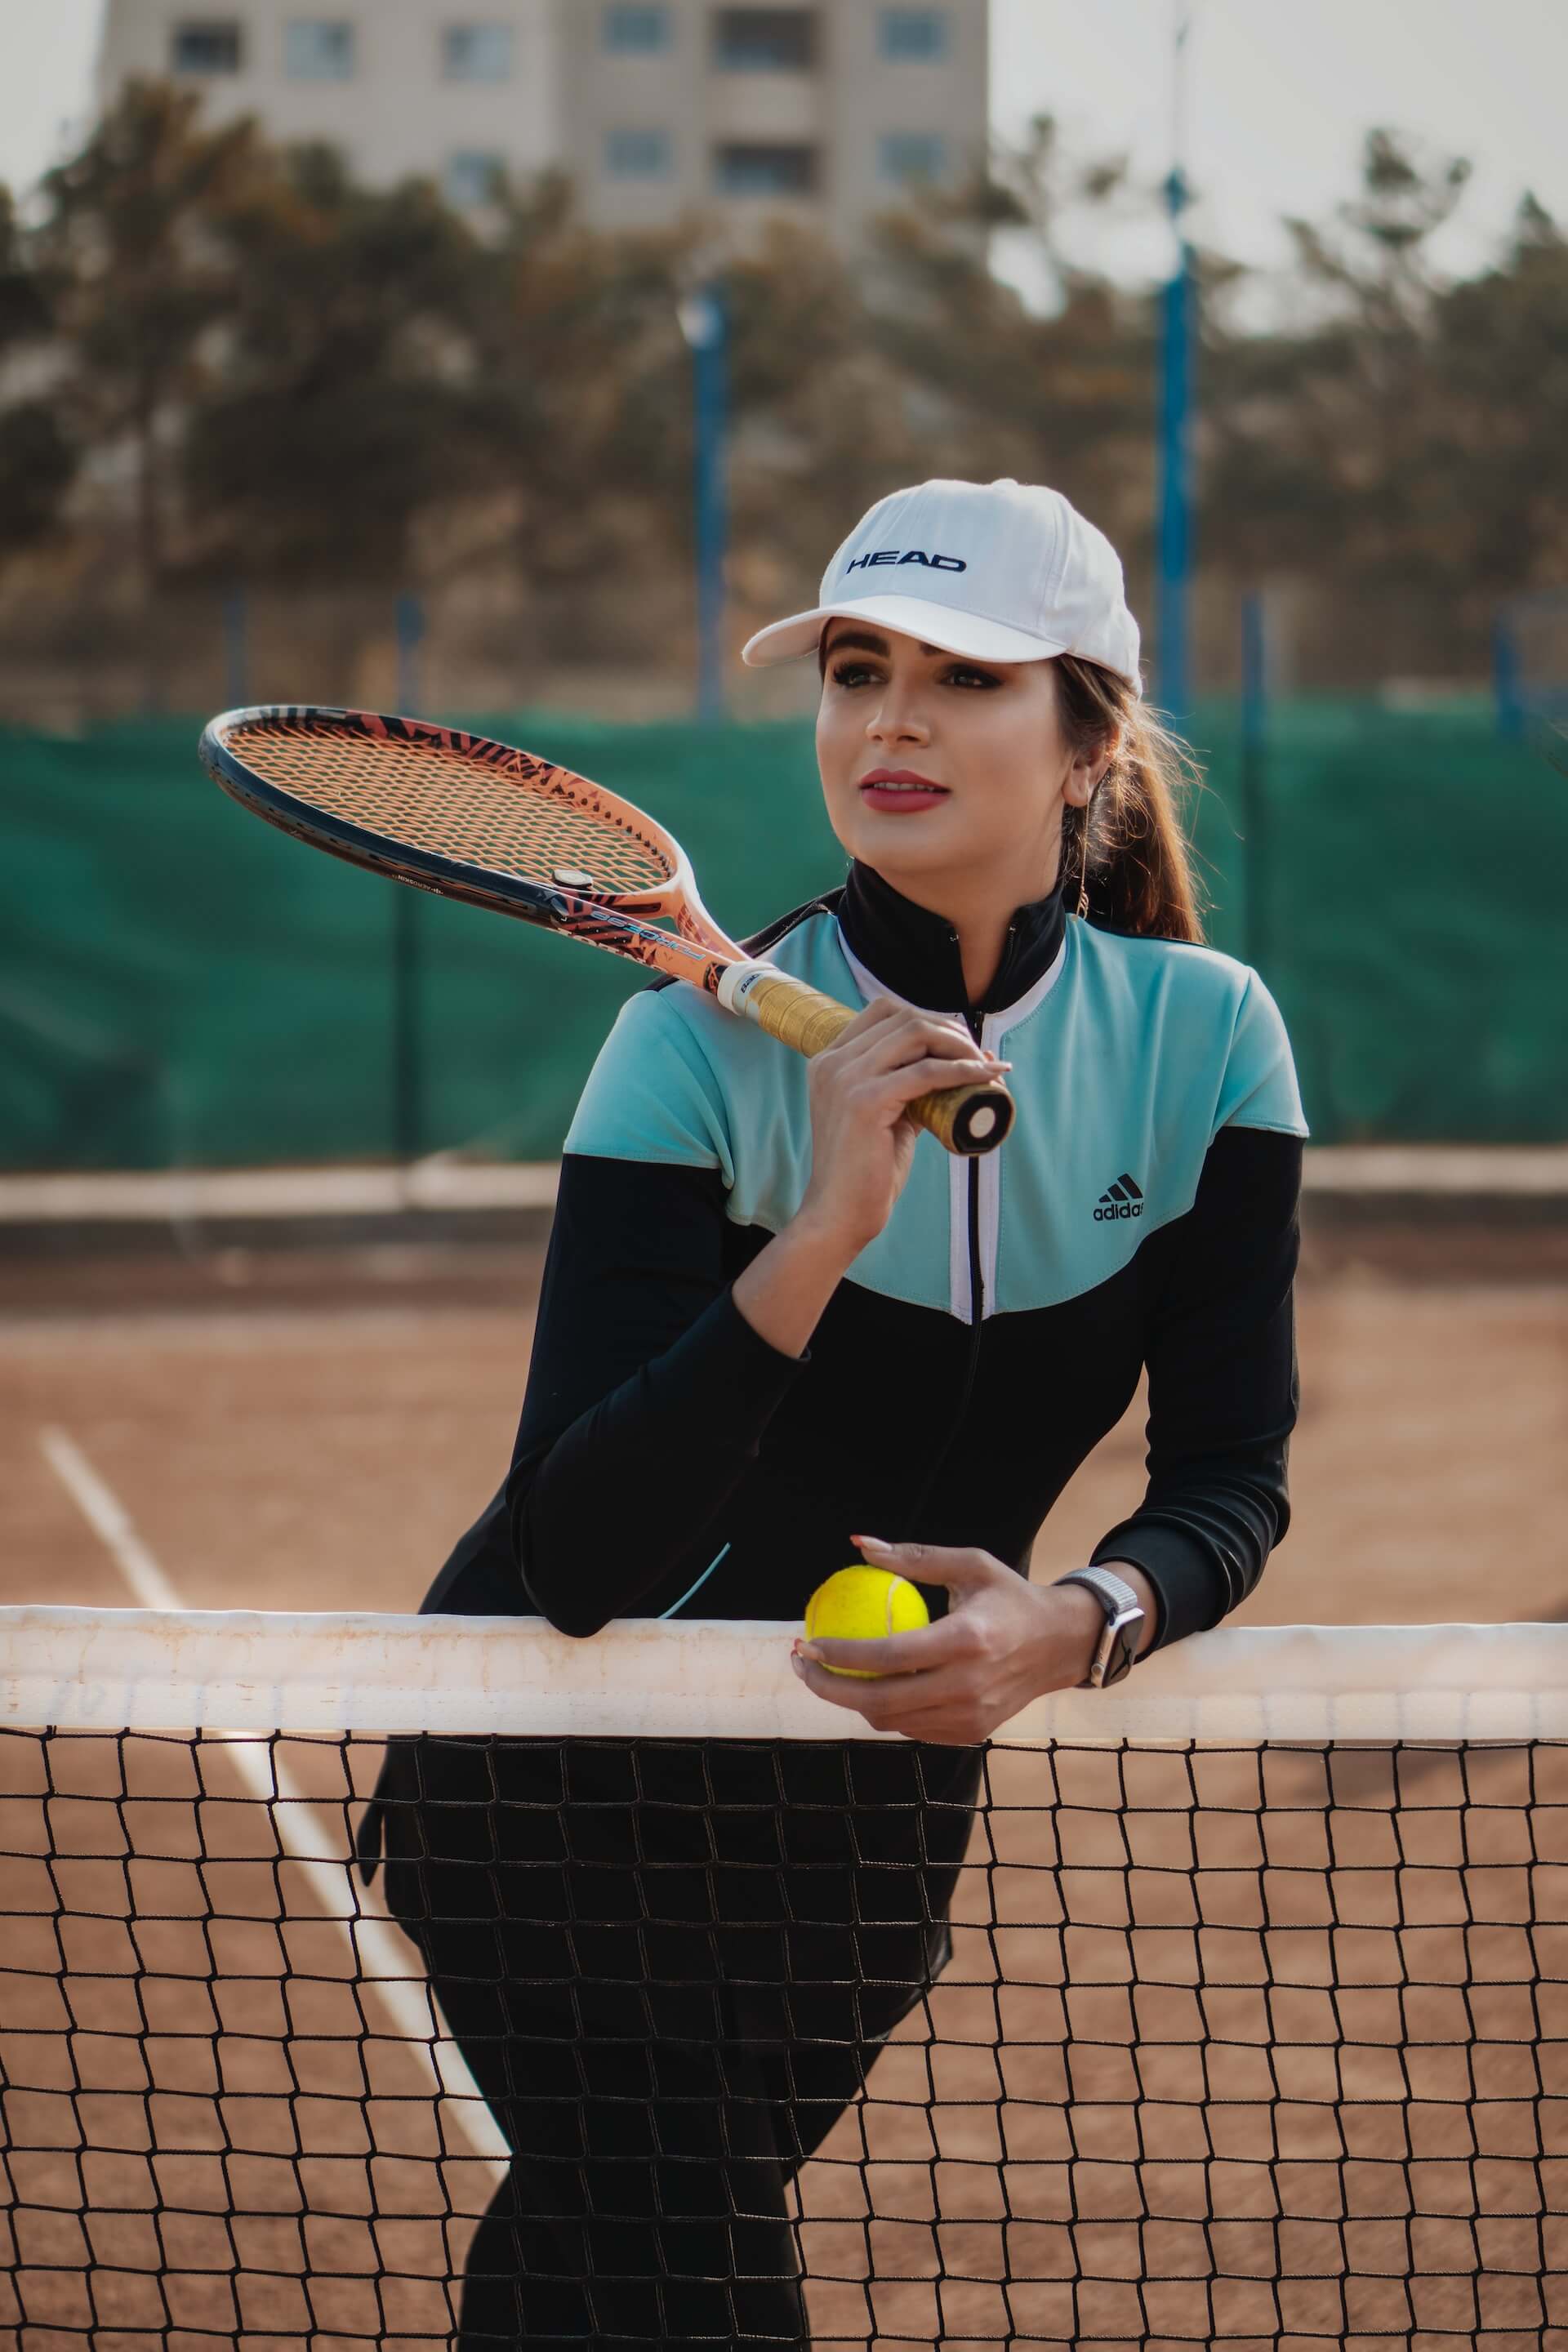 woman holding tennis ball and racquet on a tennis court